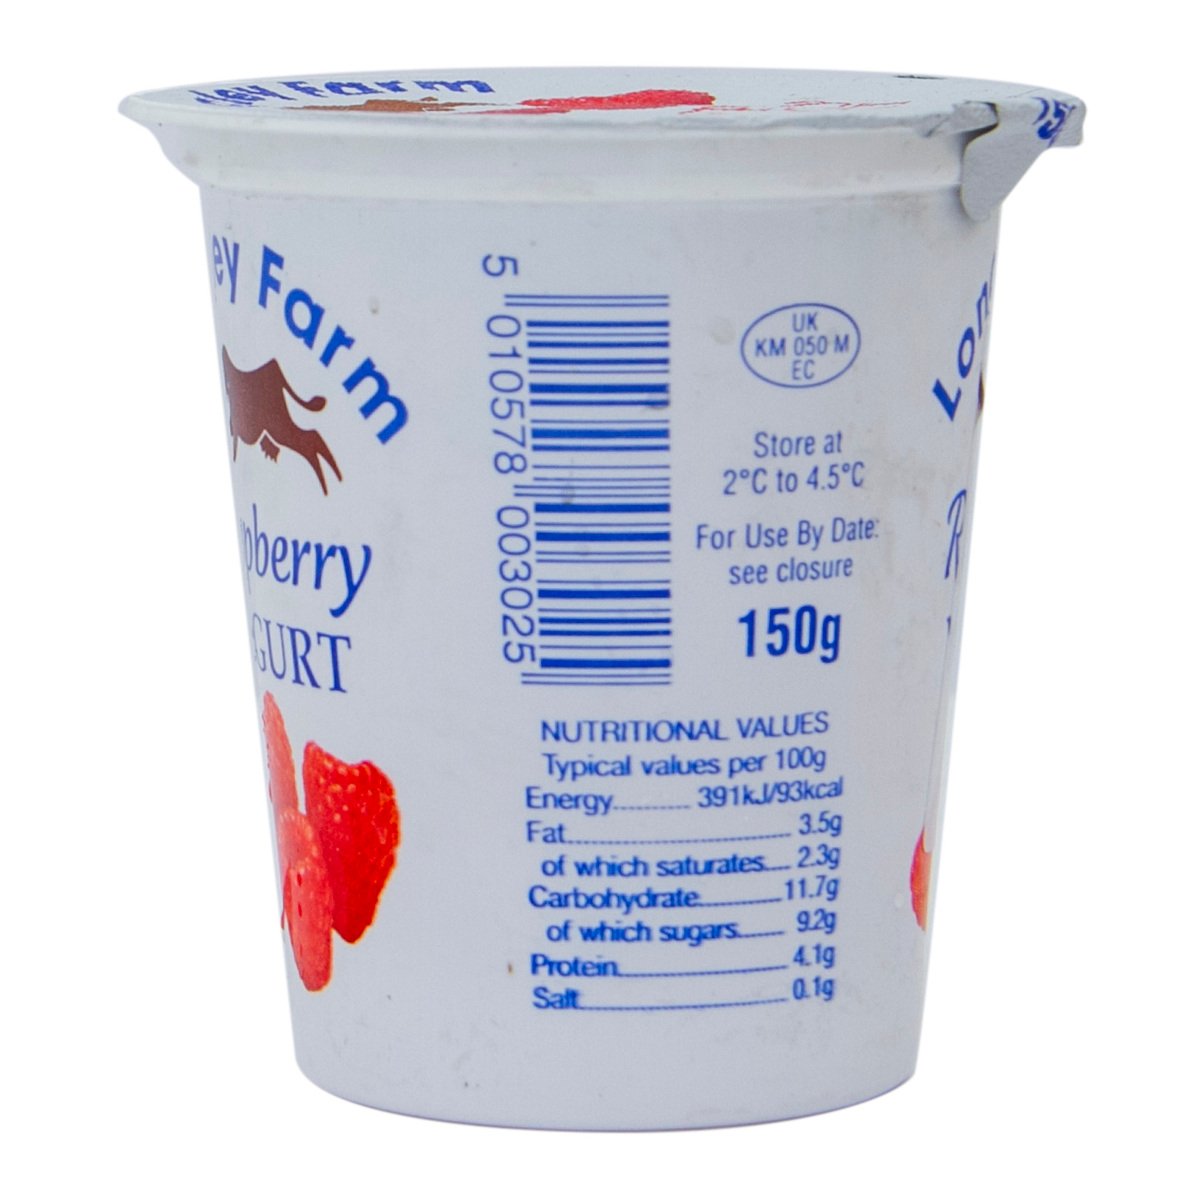 Longley Farm Yogurt Raspberry 150 g